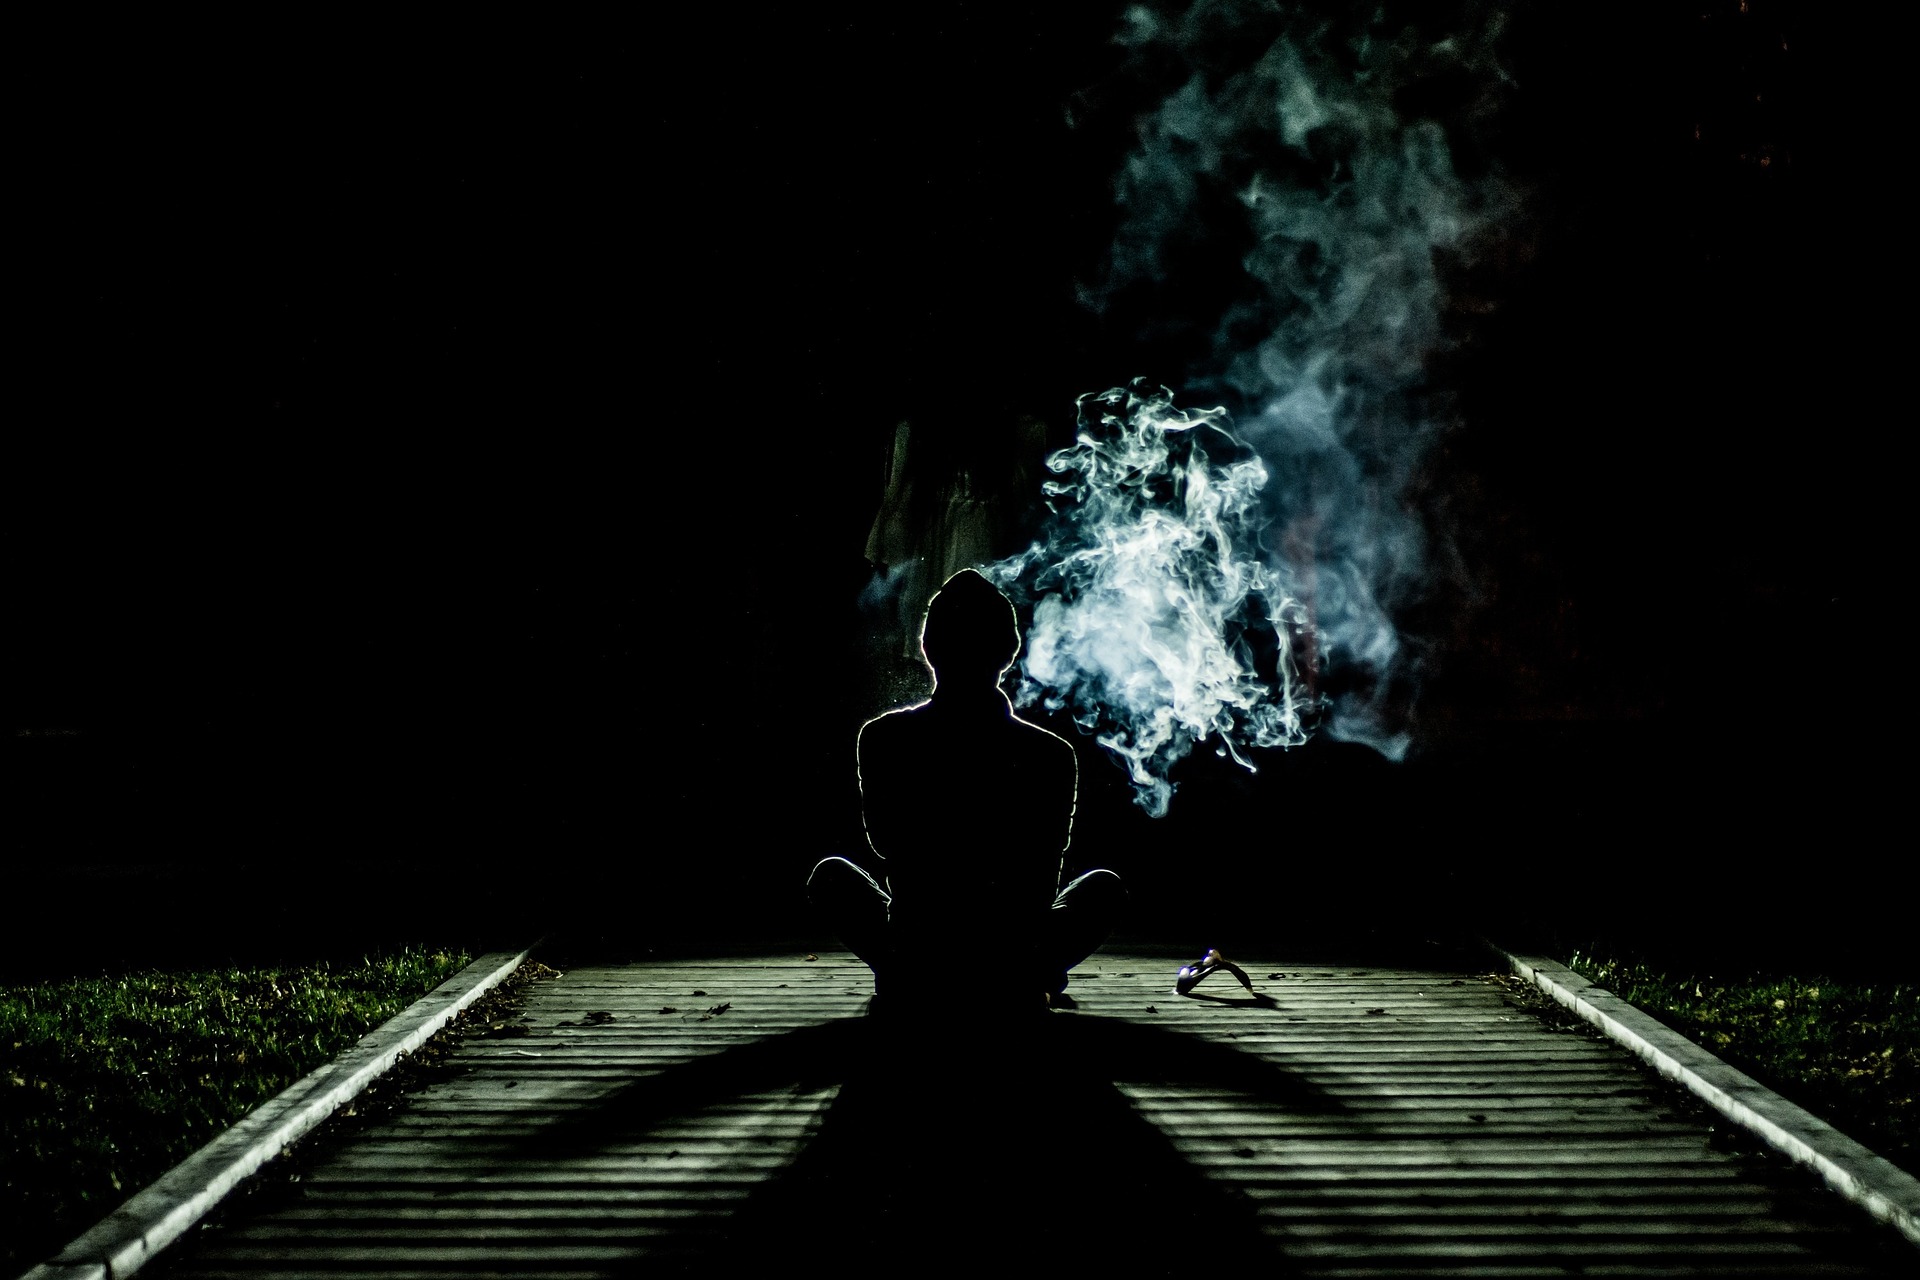 Human meditating and smoking, possibly Marijuana